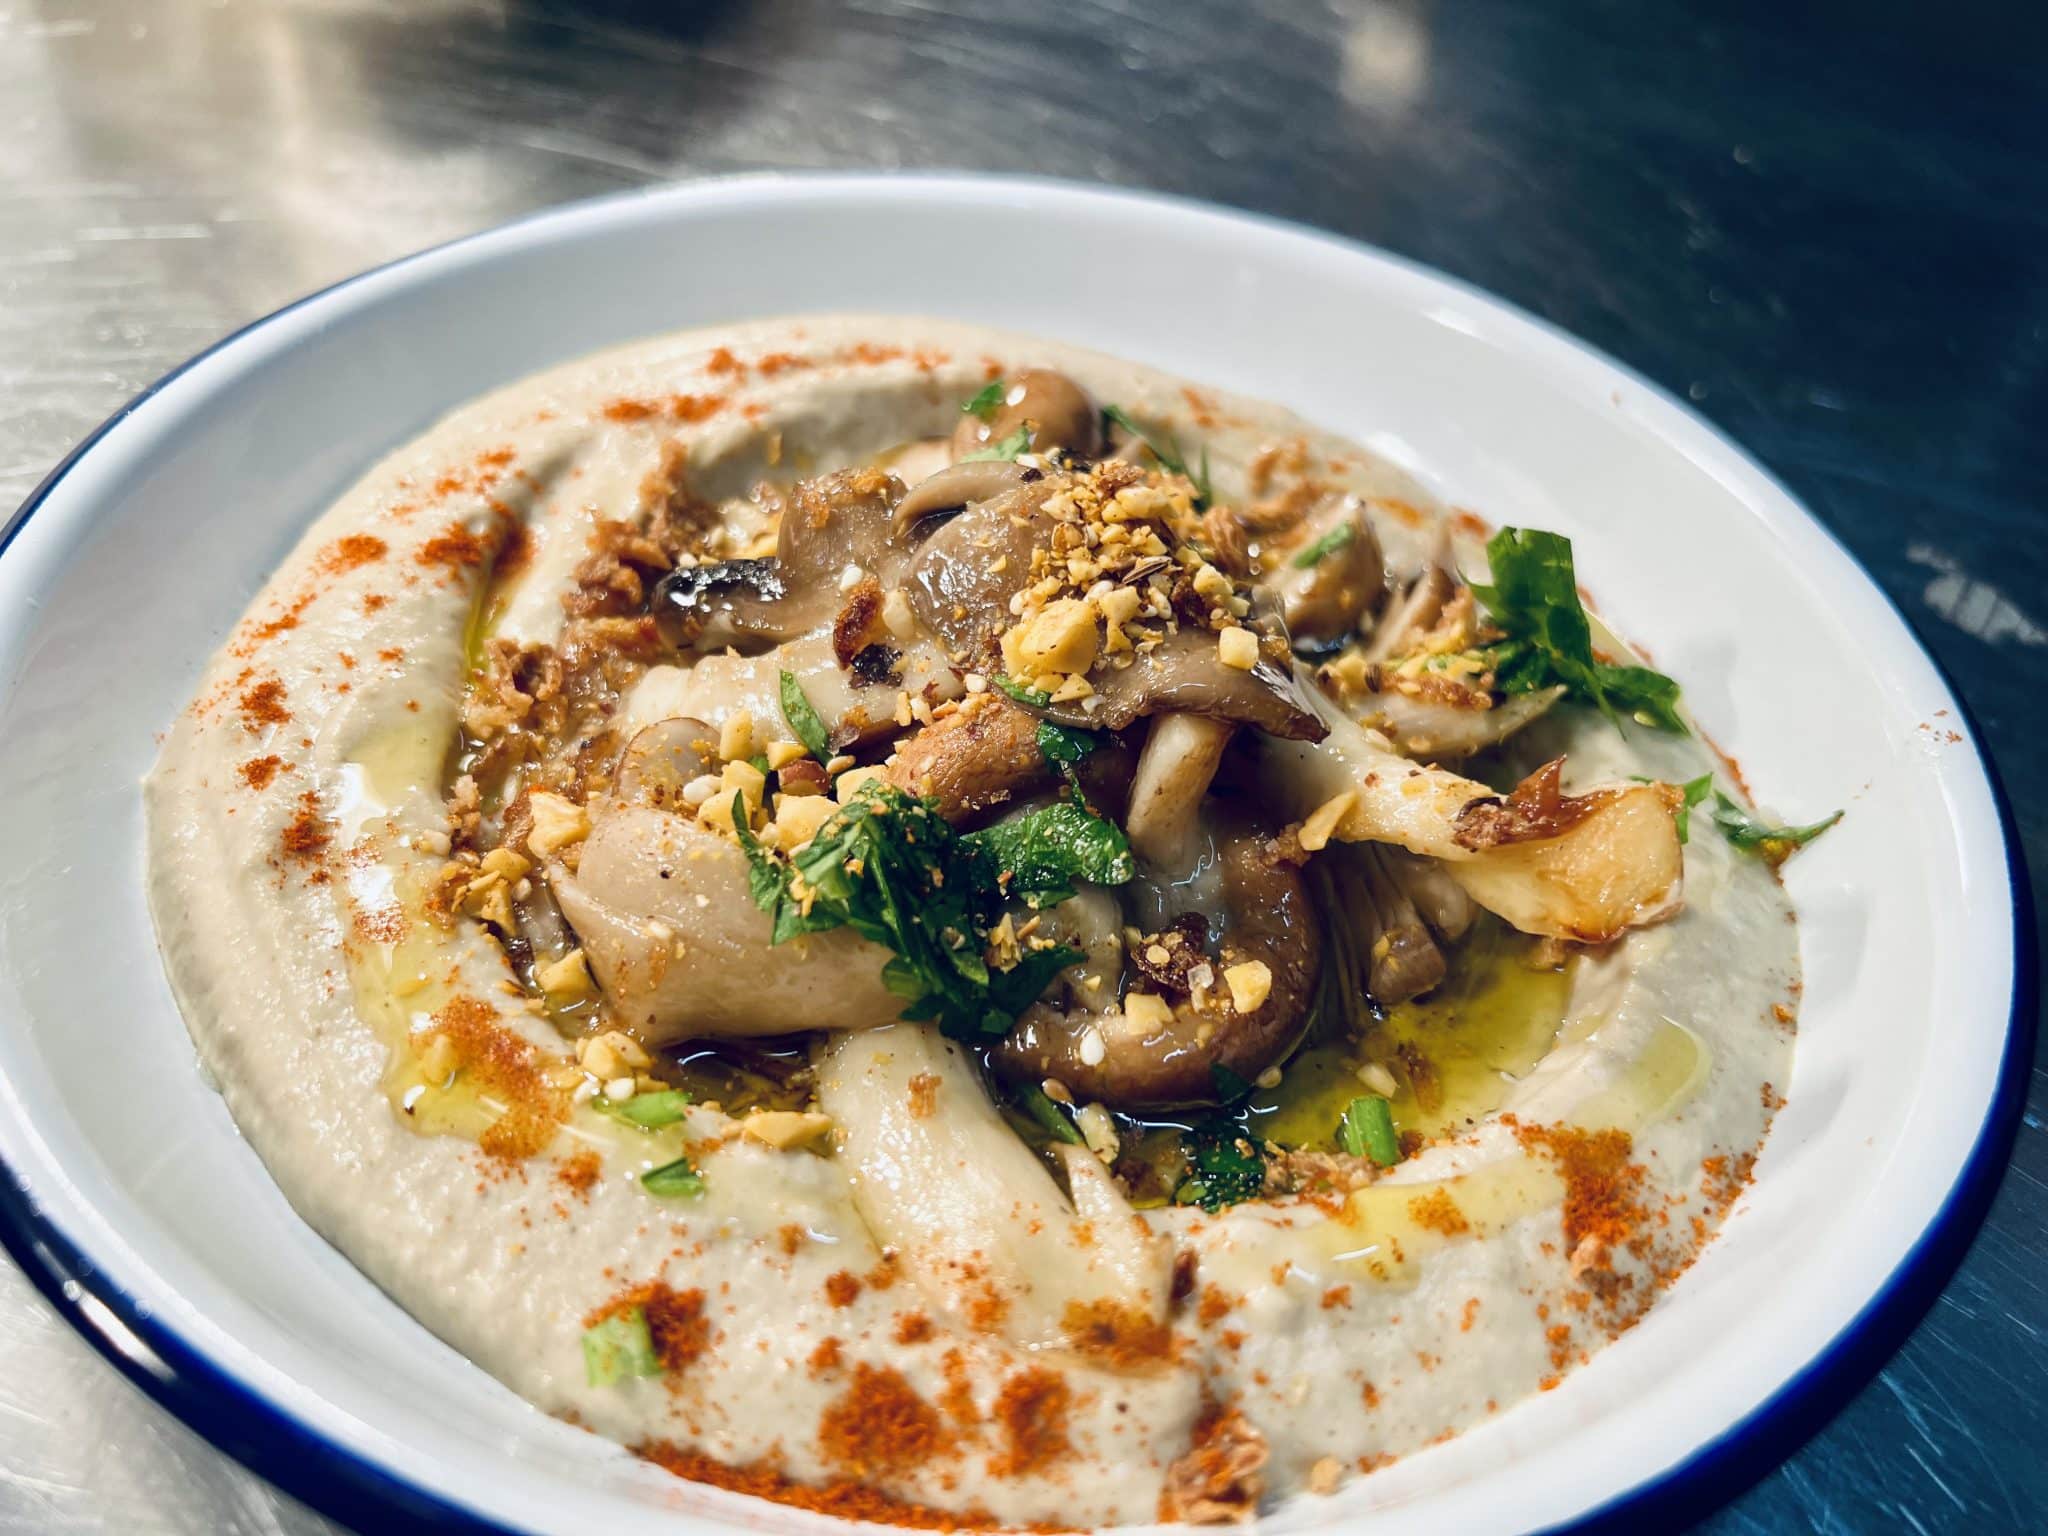 A hummus plate in Yafo, falafel restaurant